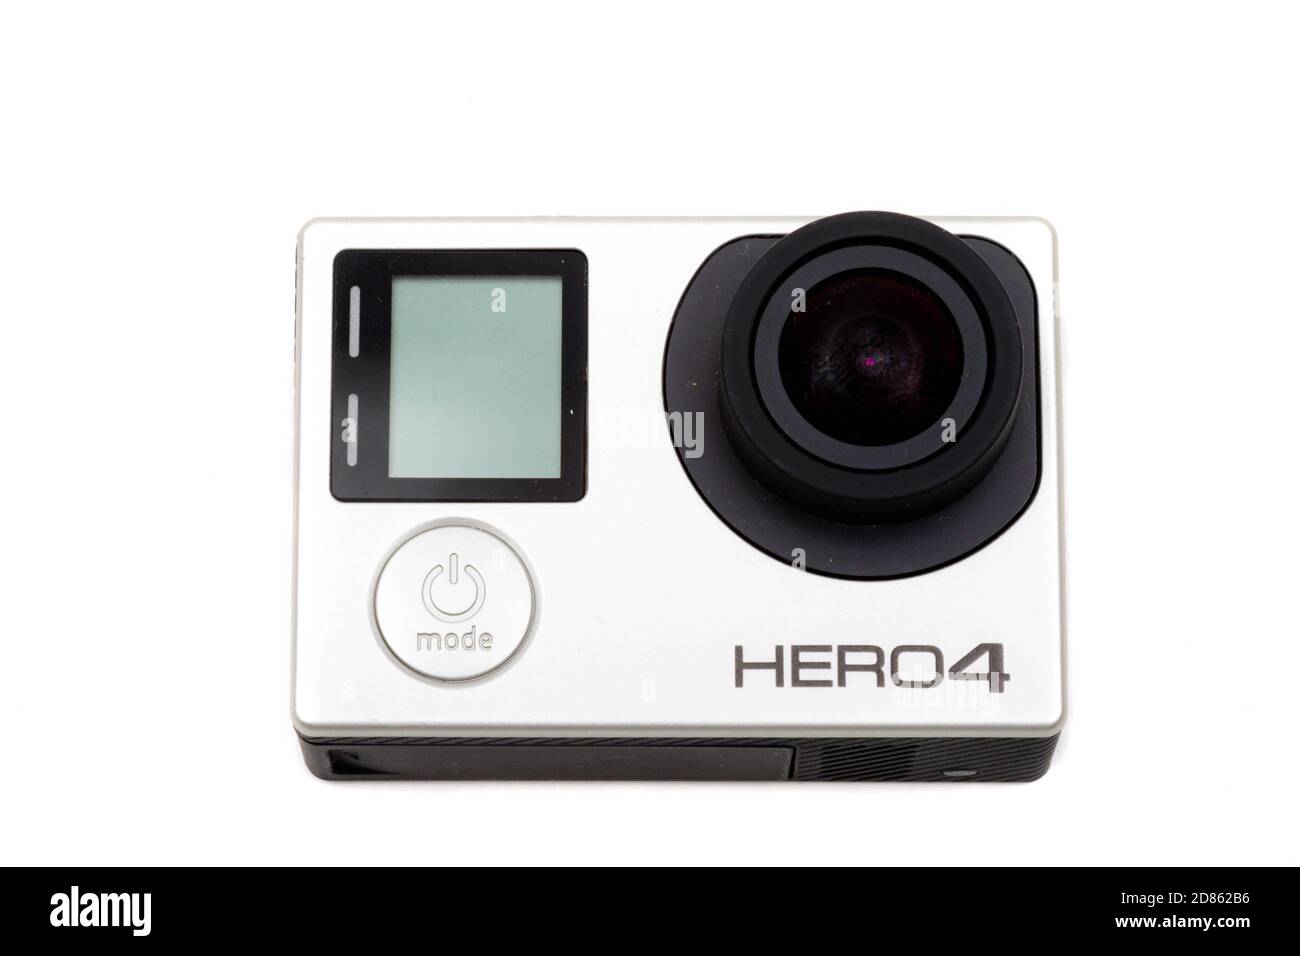 London, United Kingdom, 21st September 2020:- A GoPro Hero4 camera isolated on a white background Stock Photo